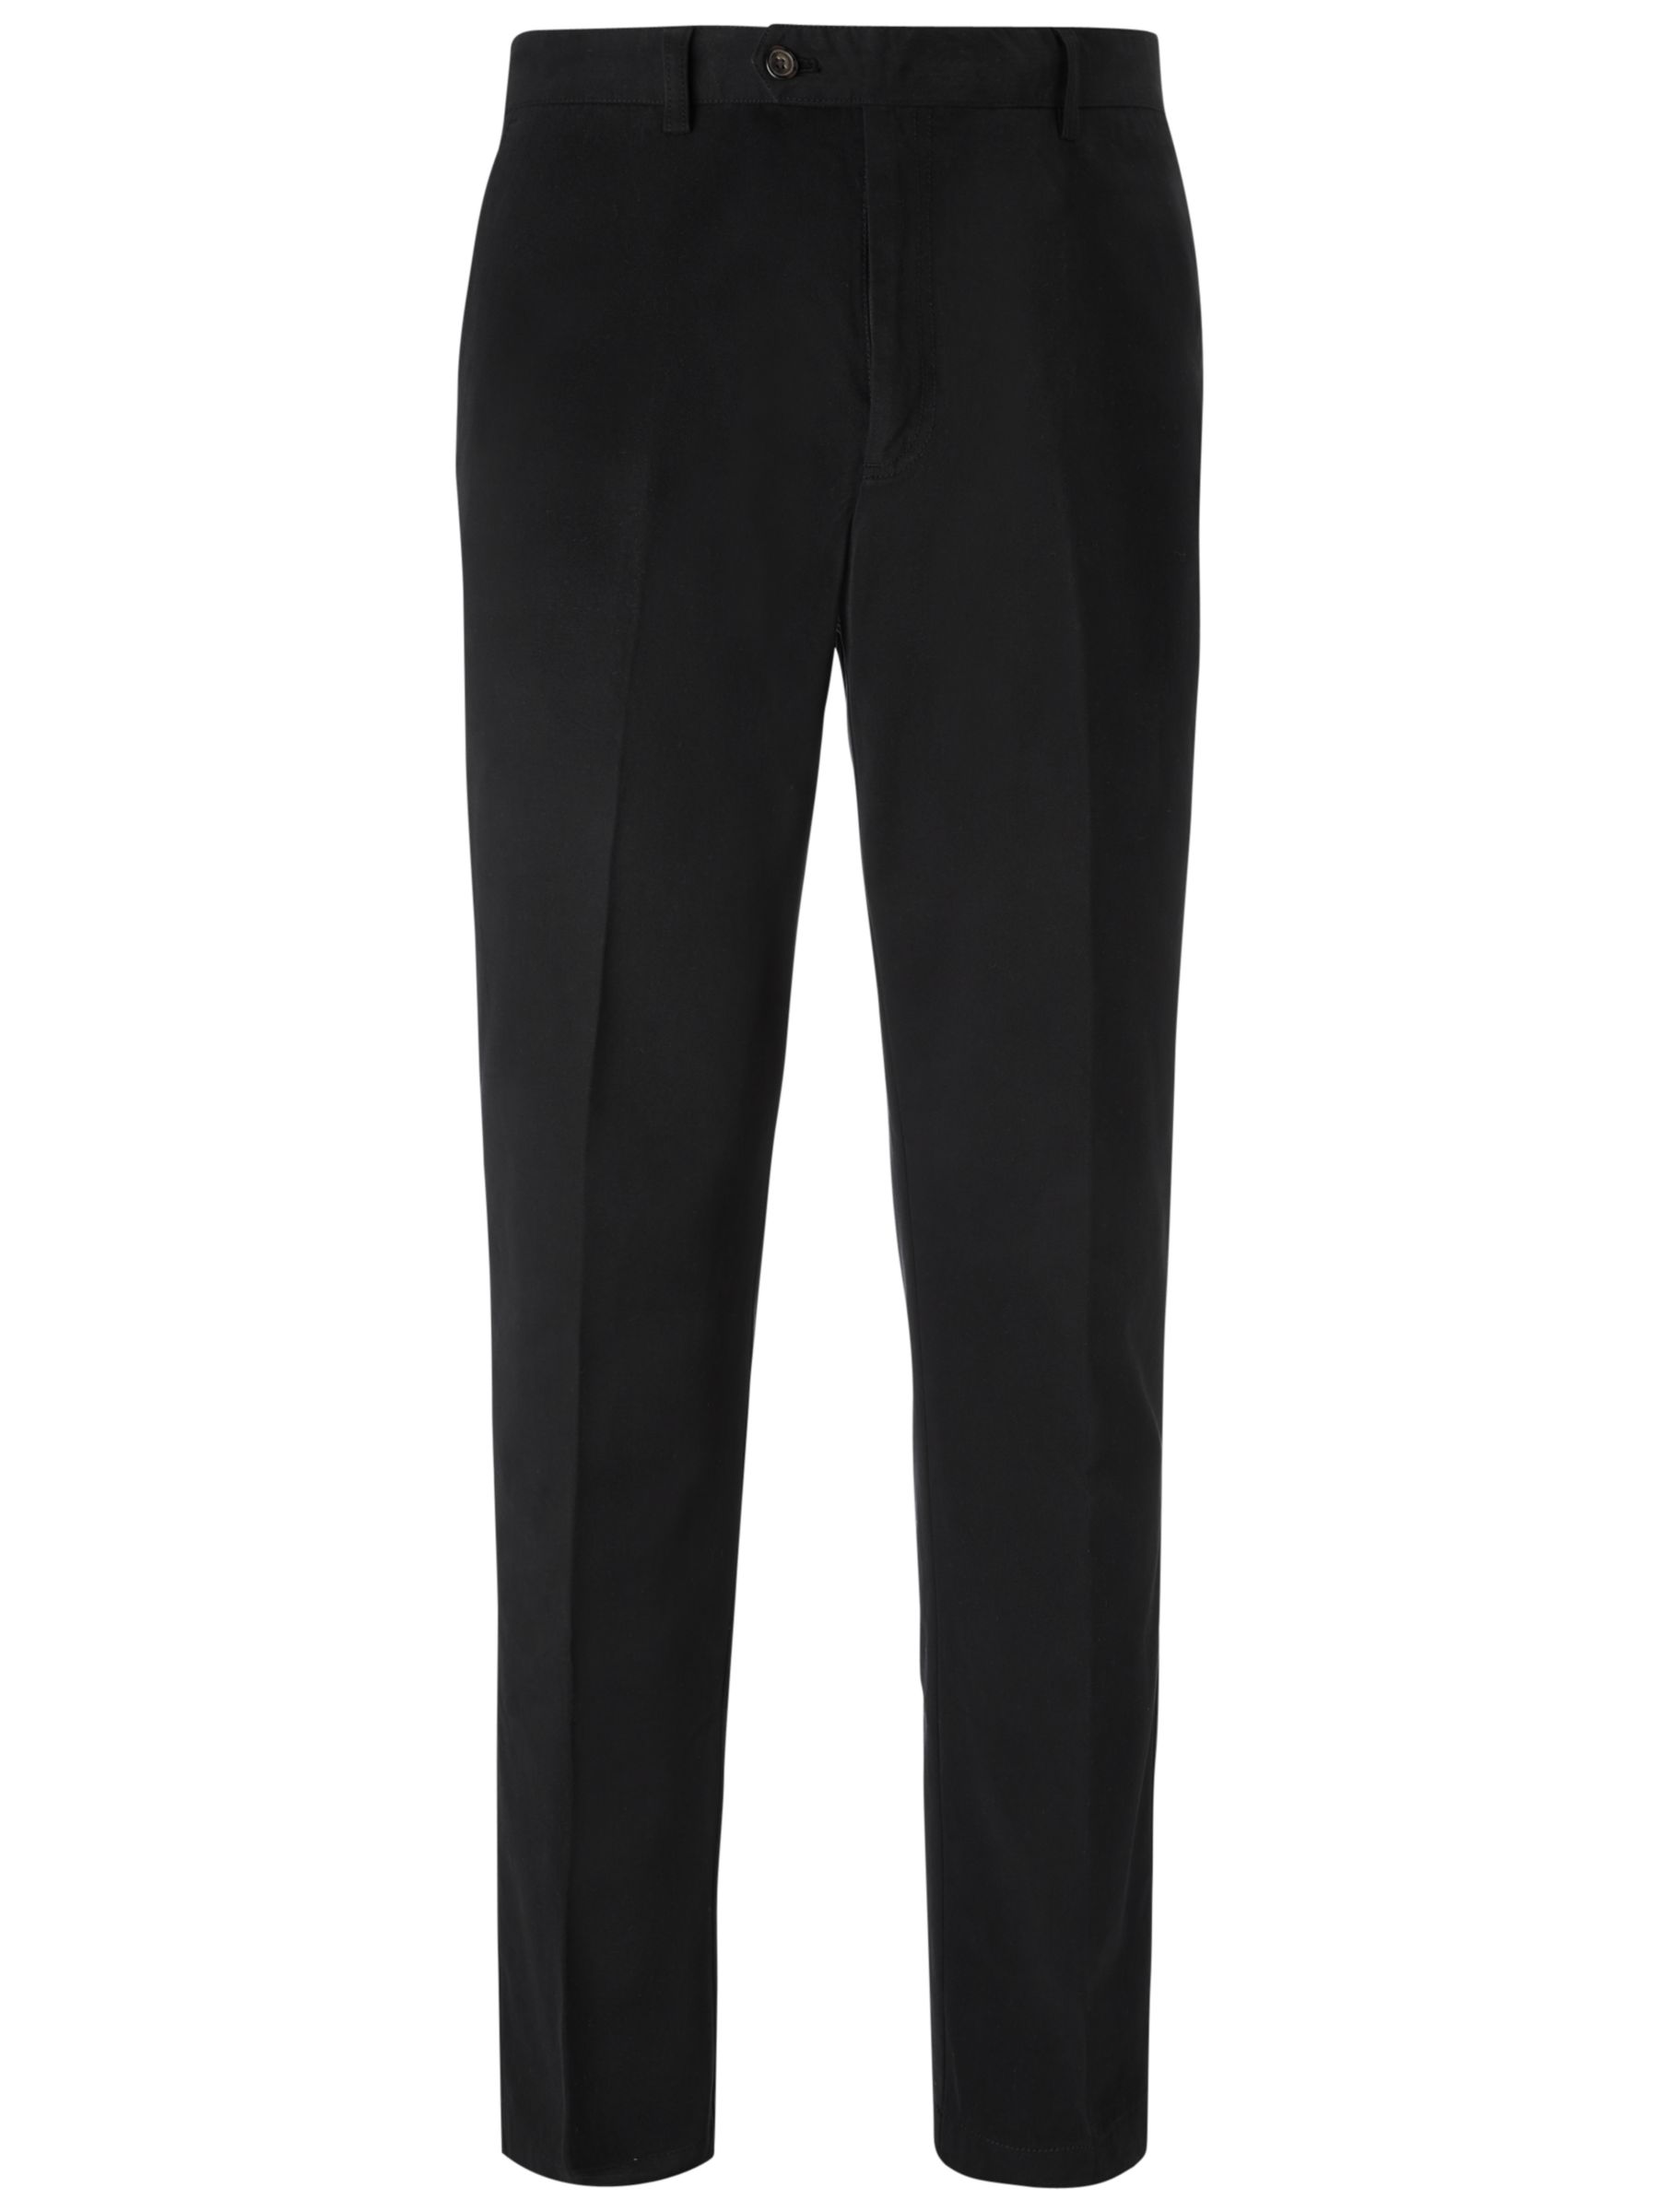 John Lewis & Partners Wrinkle Free Flat Front Trousers, Black, 38S